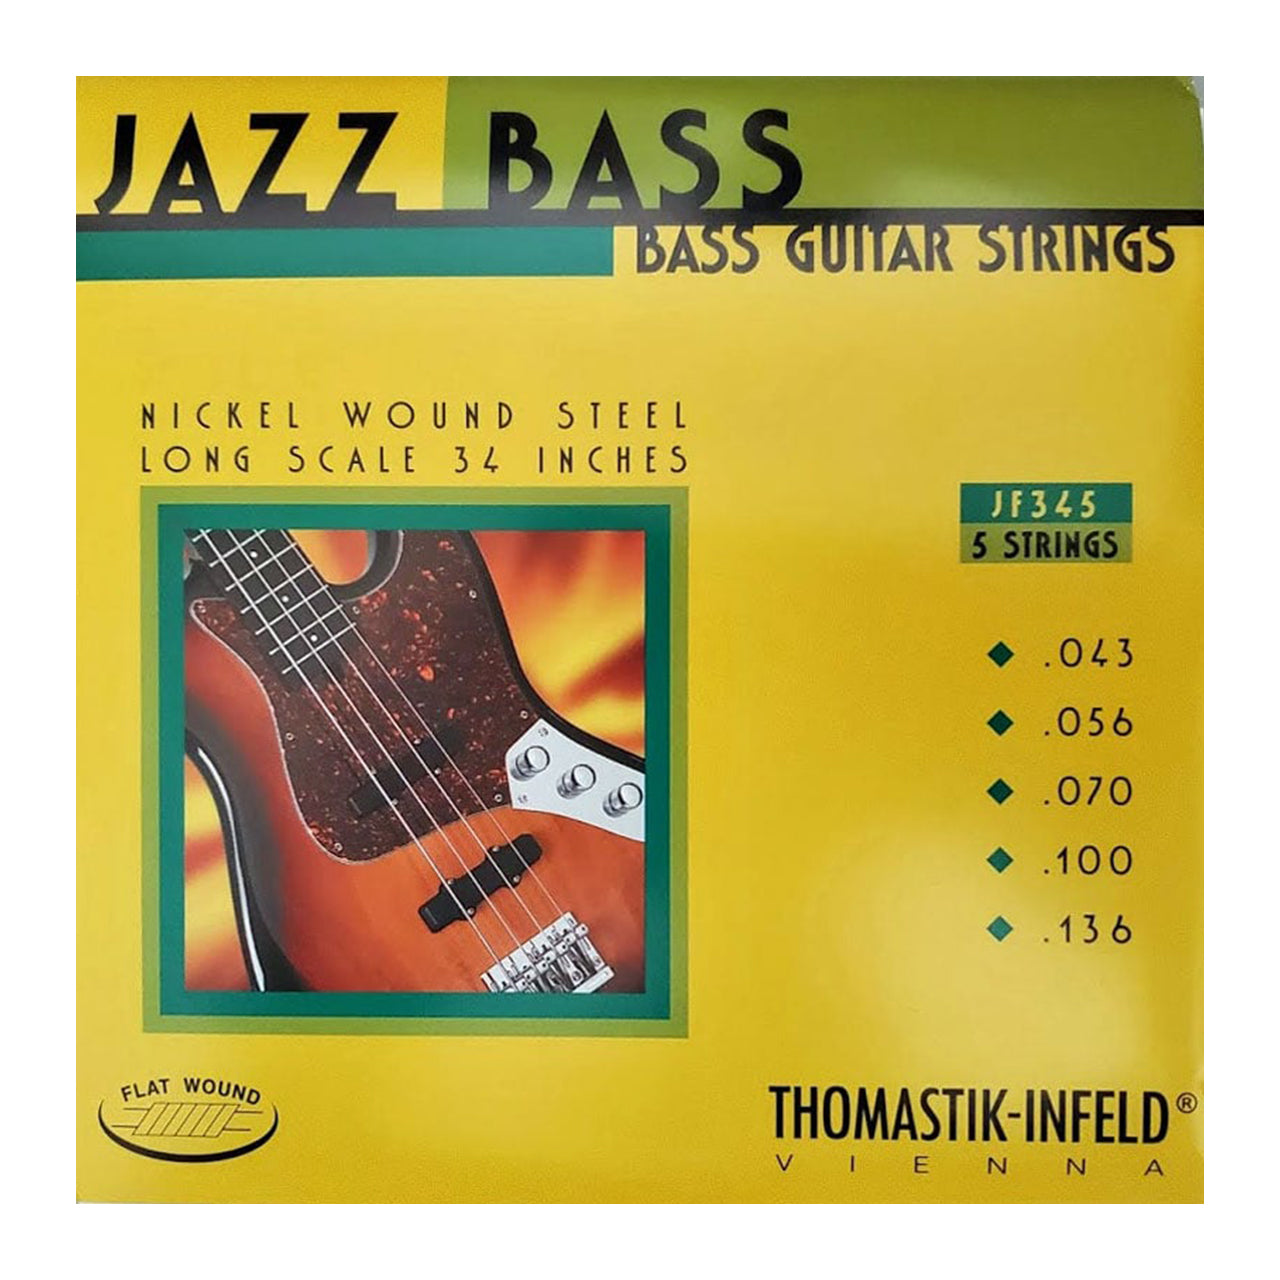 Thomastik-Infeld JF345 Nickel Wound Steel Long Scale 34" 5-String Jazz Electric Bass Strings, 43-136